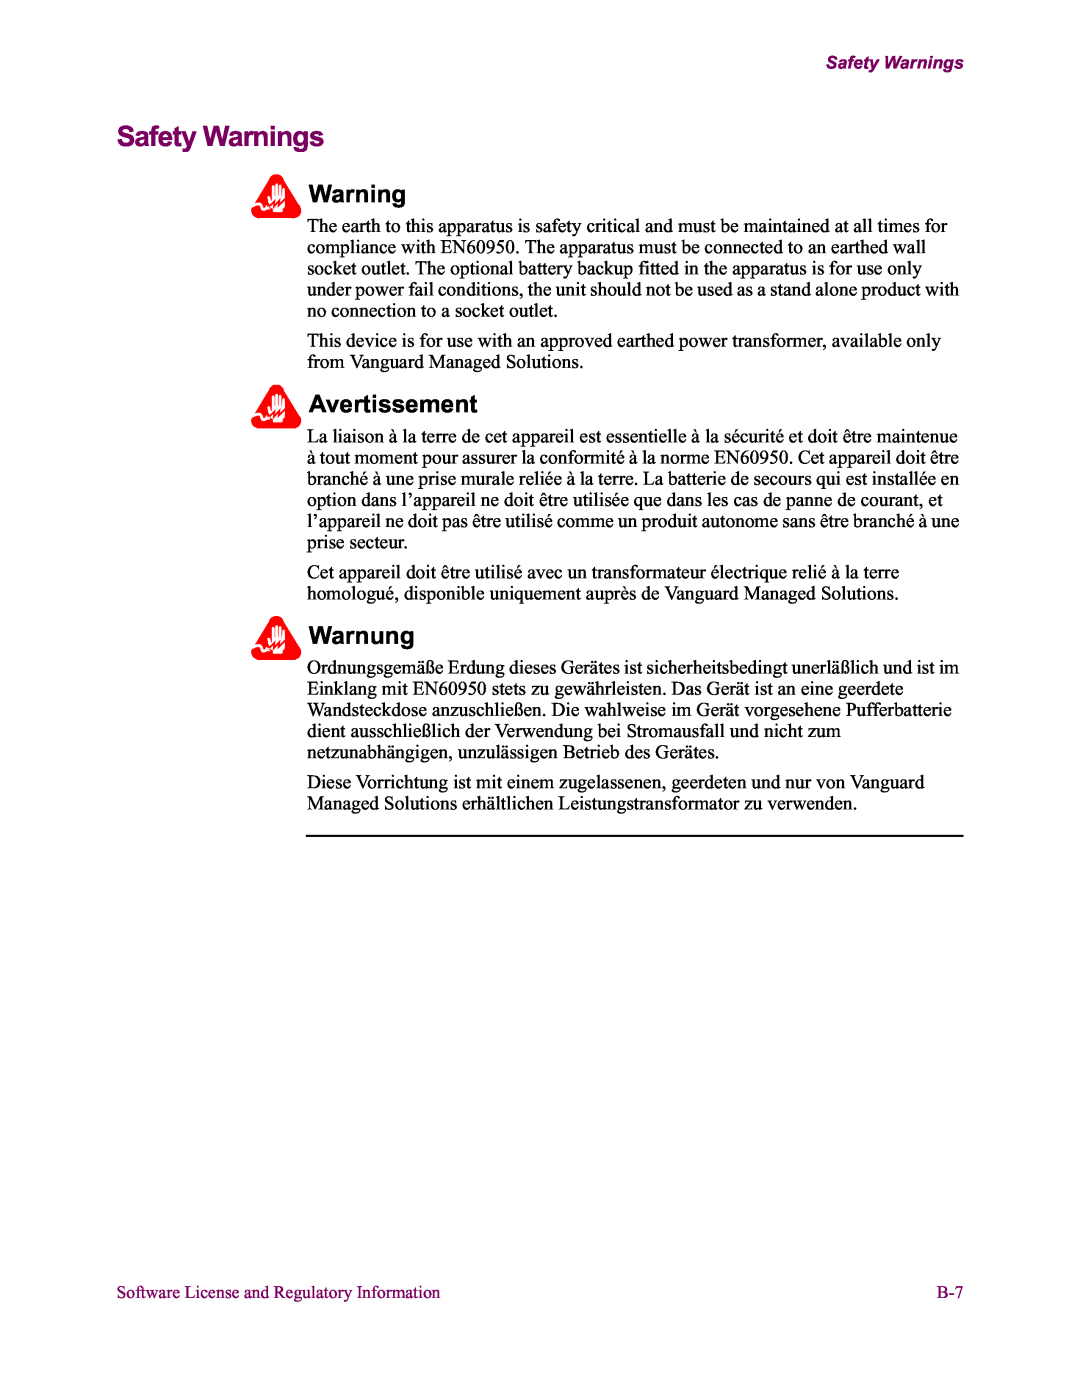 Vanguard Managed Solutions 650 installation manual Safety Warnings, Avertissement, Warnung 